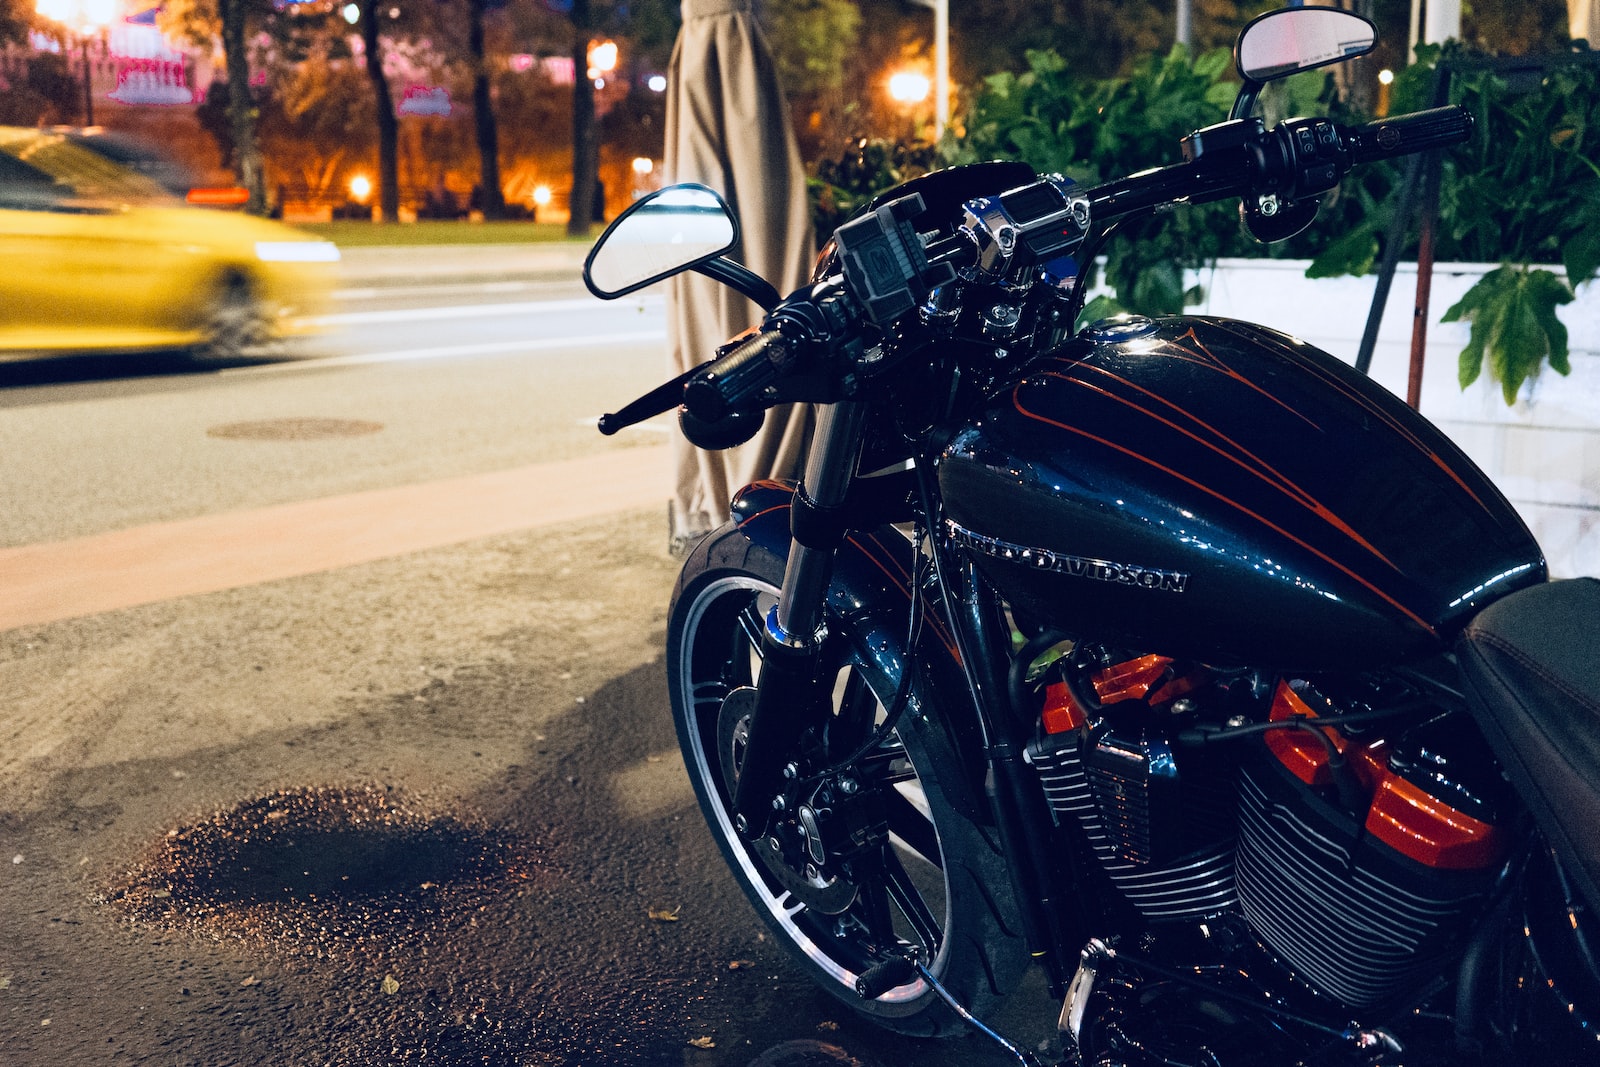 black and brown motorcycle